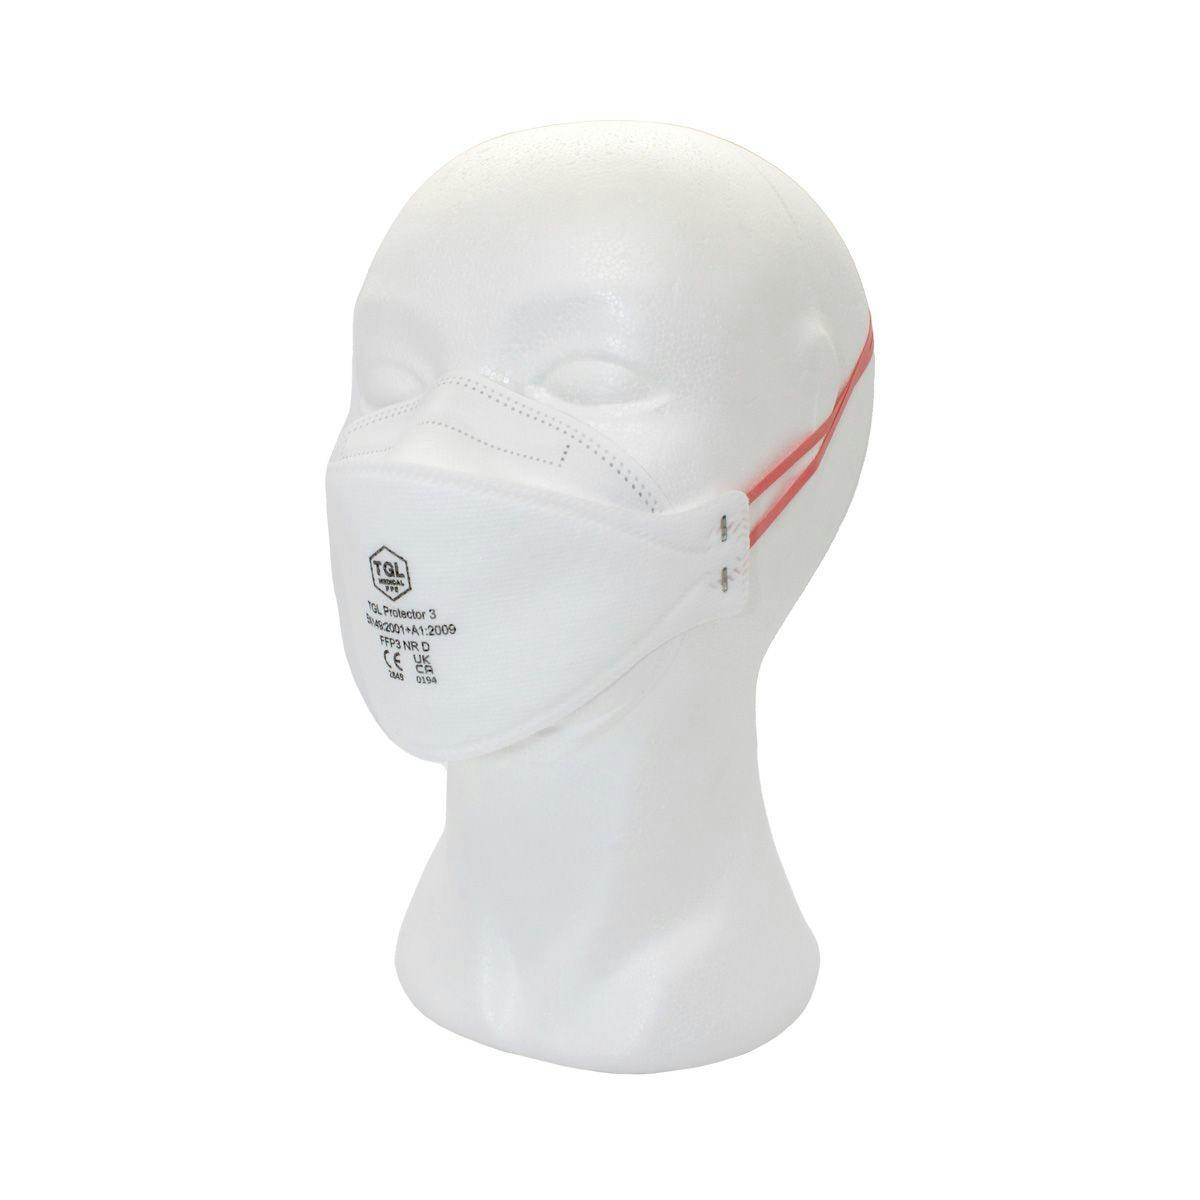 FFP3 COVID-19 Medical Respirator Mask